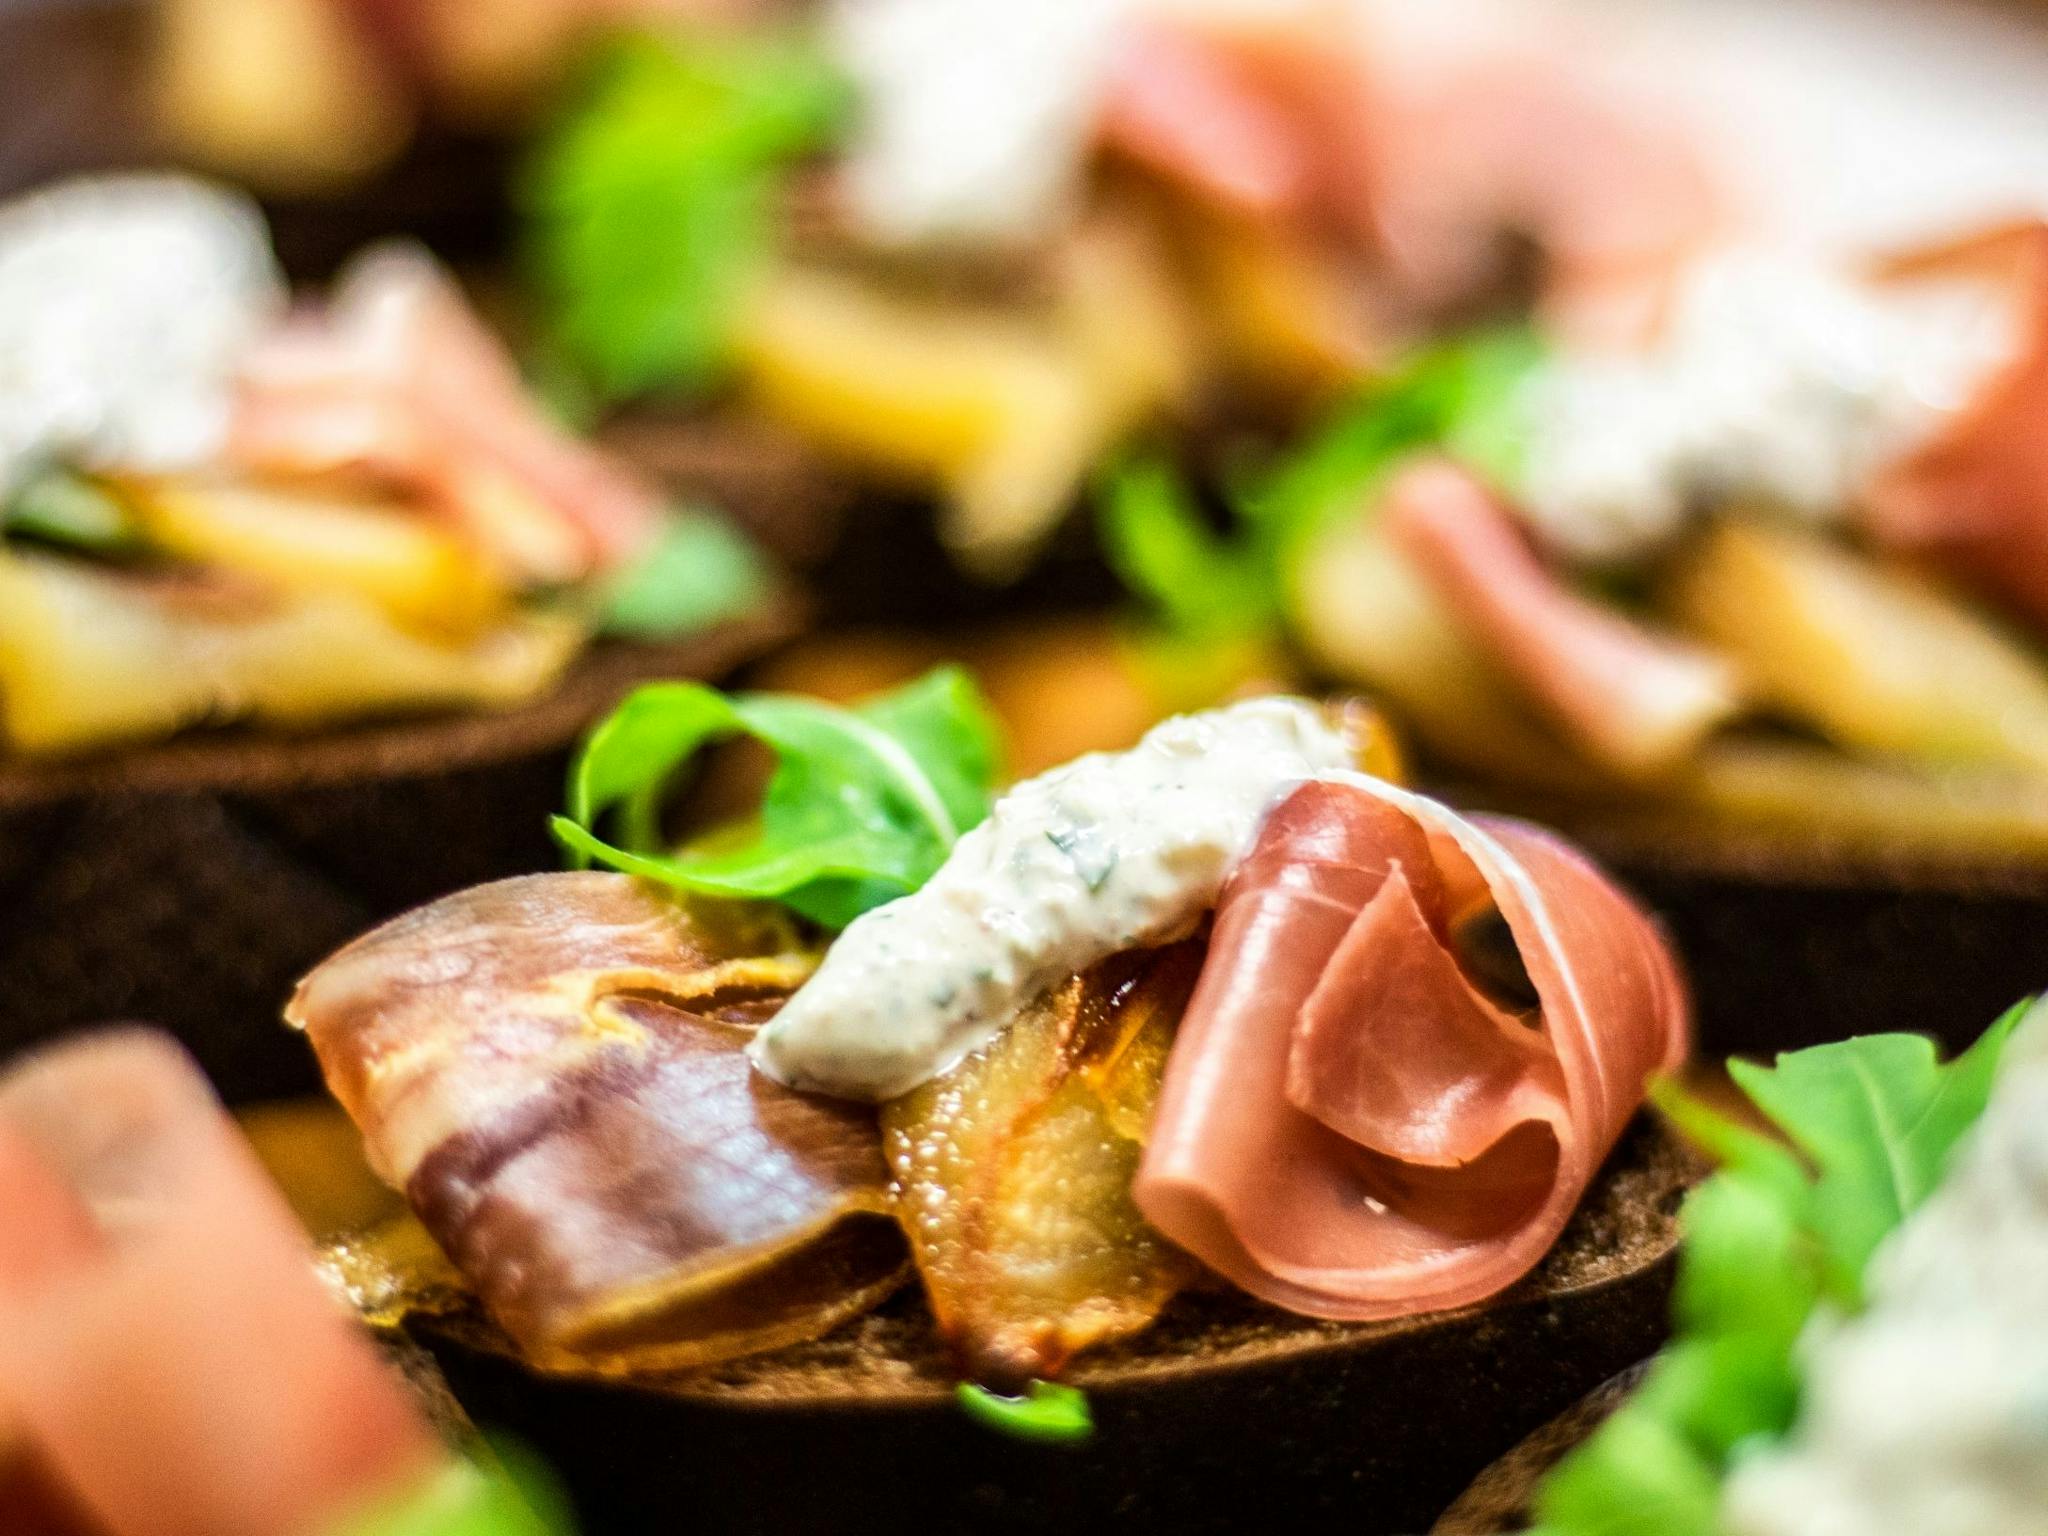 Pear, prosciutto, walnut pesto as a starter to any event